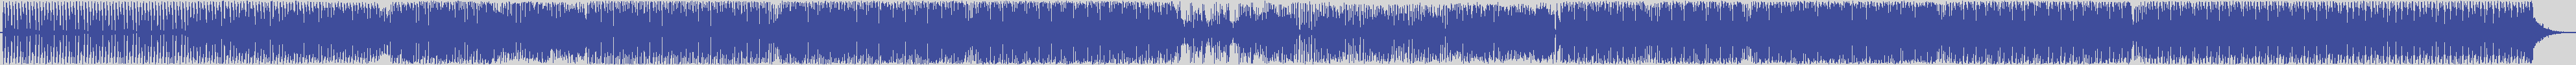 atomic_recordings [AR011] Gube, Sala, Peruz - Da Girl [Christian Vila & Jordy Sanchez Rmx] audio wave form